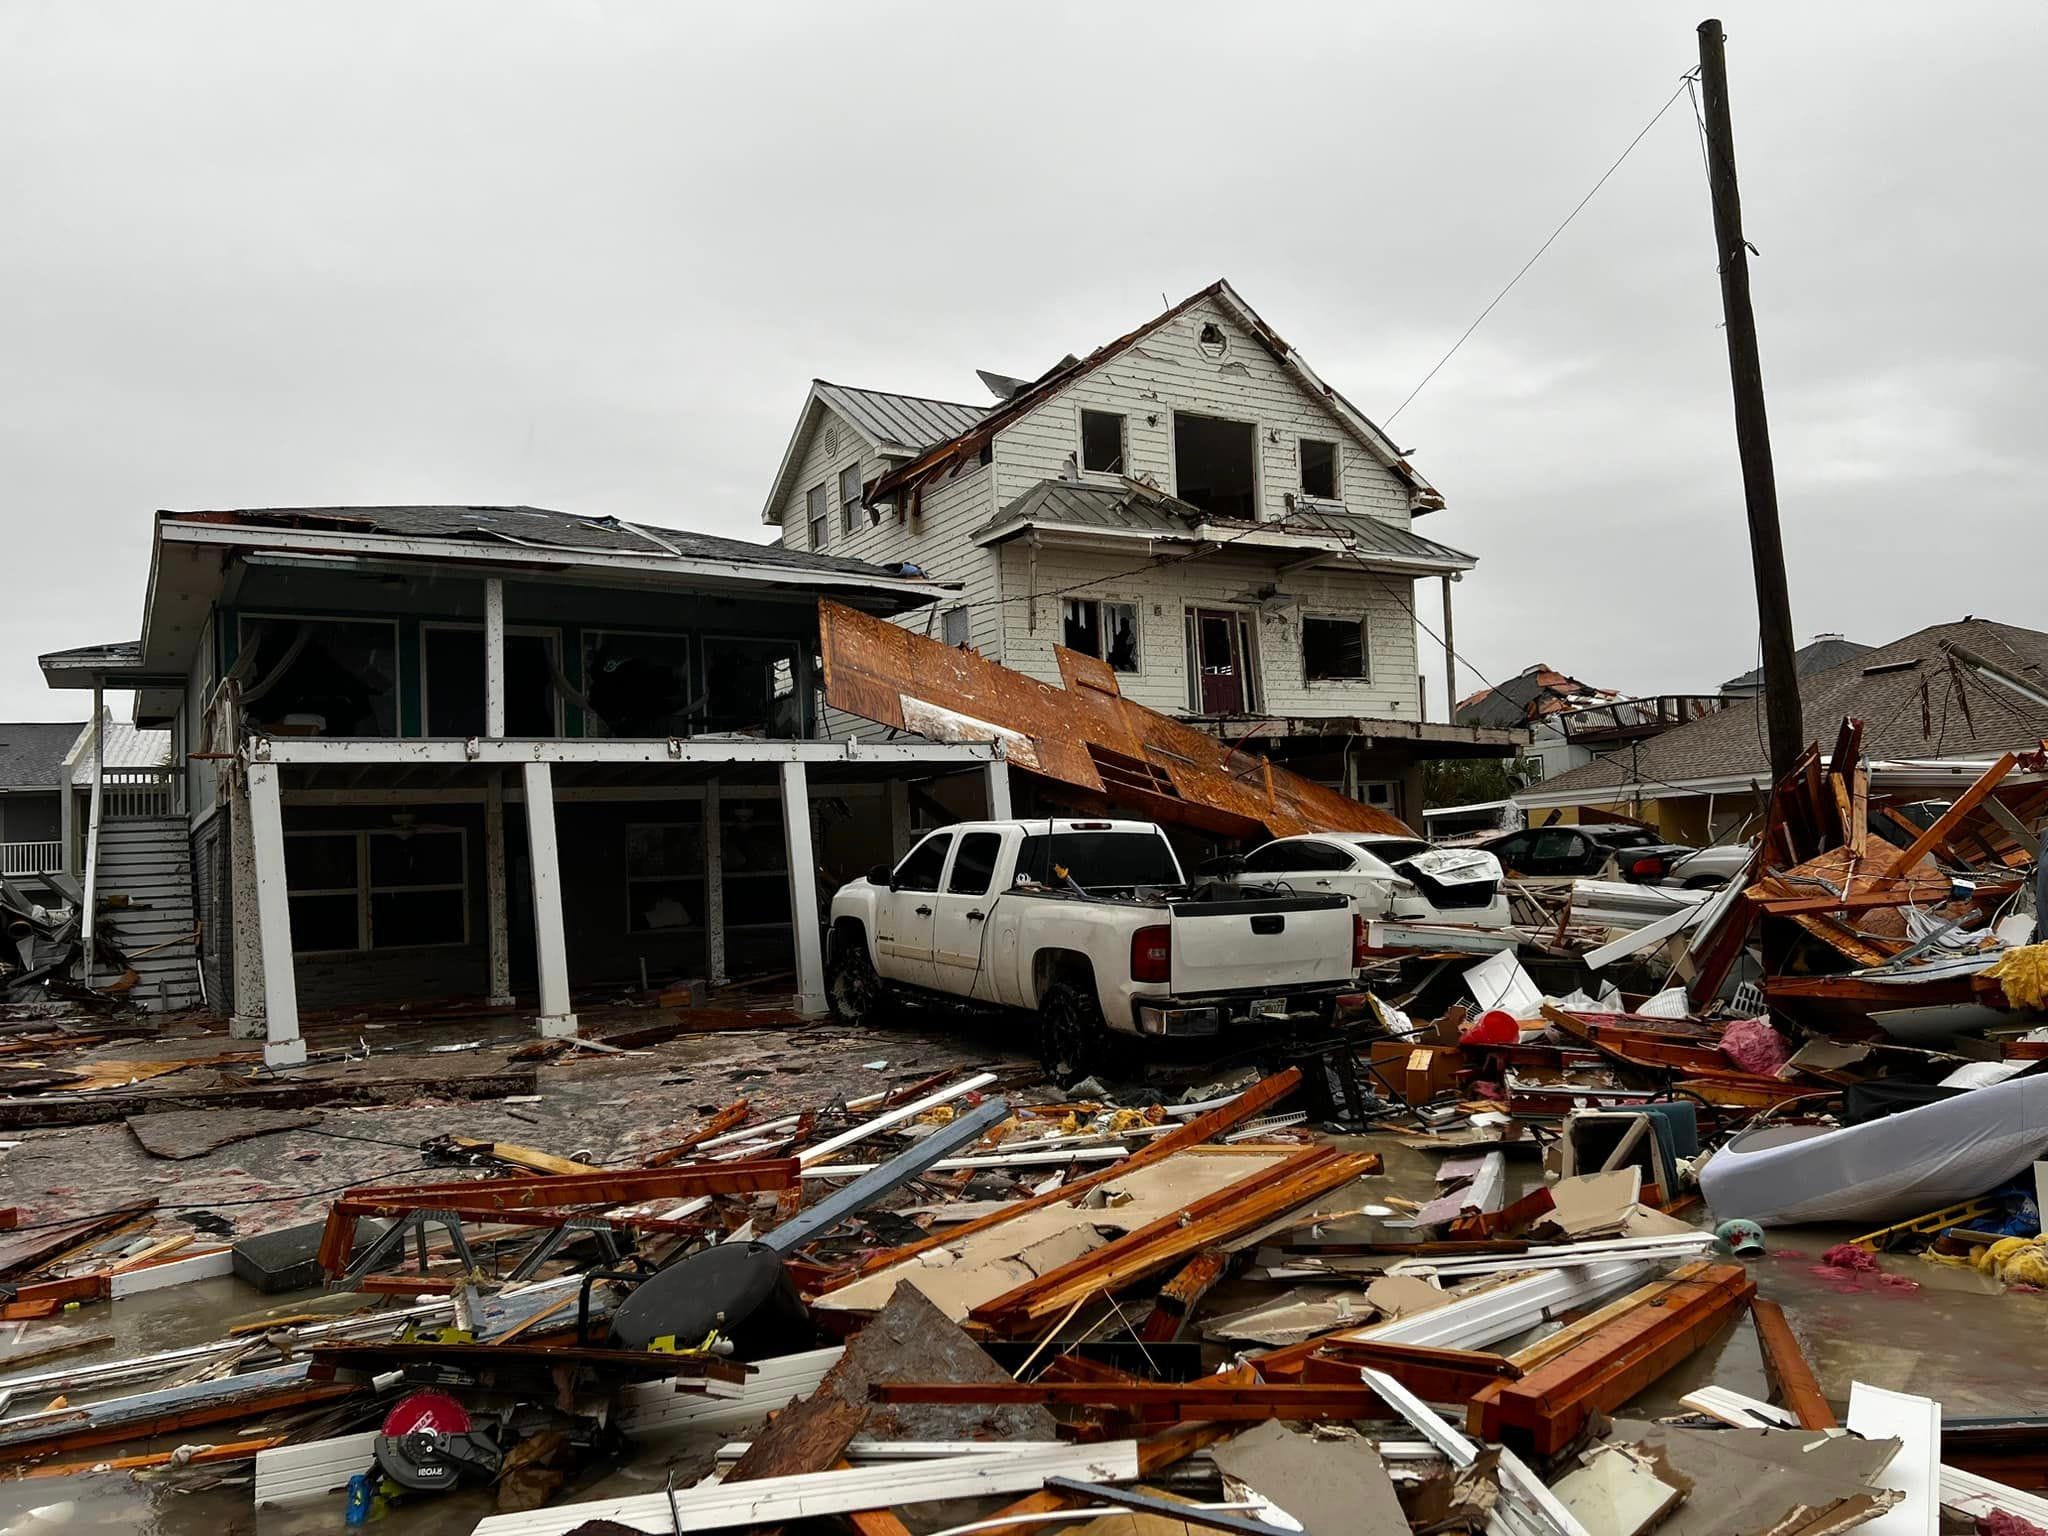 Florida tornadoes See photos of damage in Panama City, Marianna and